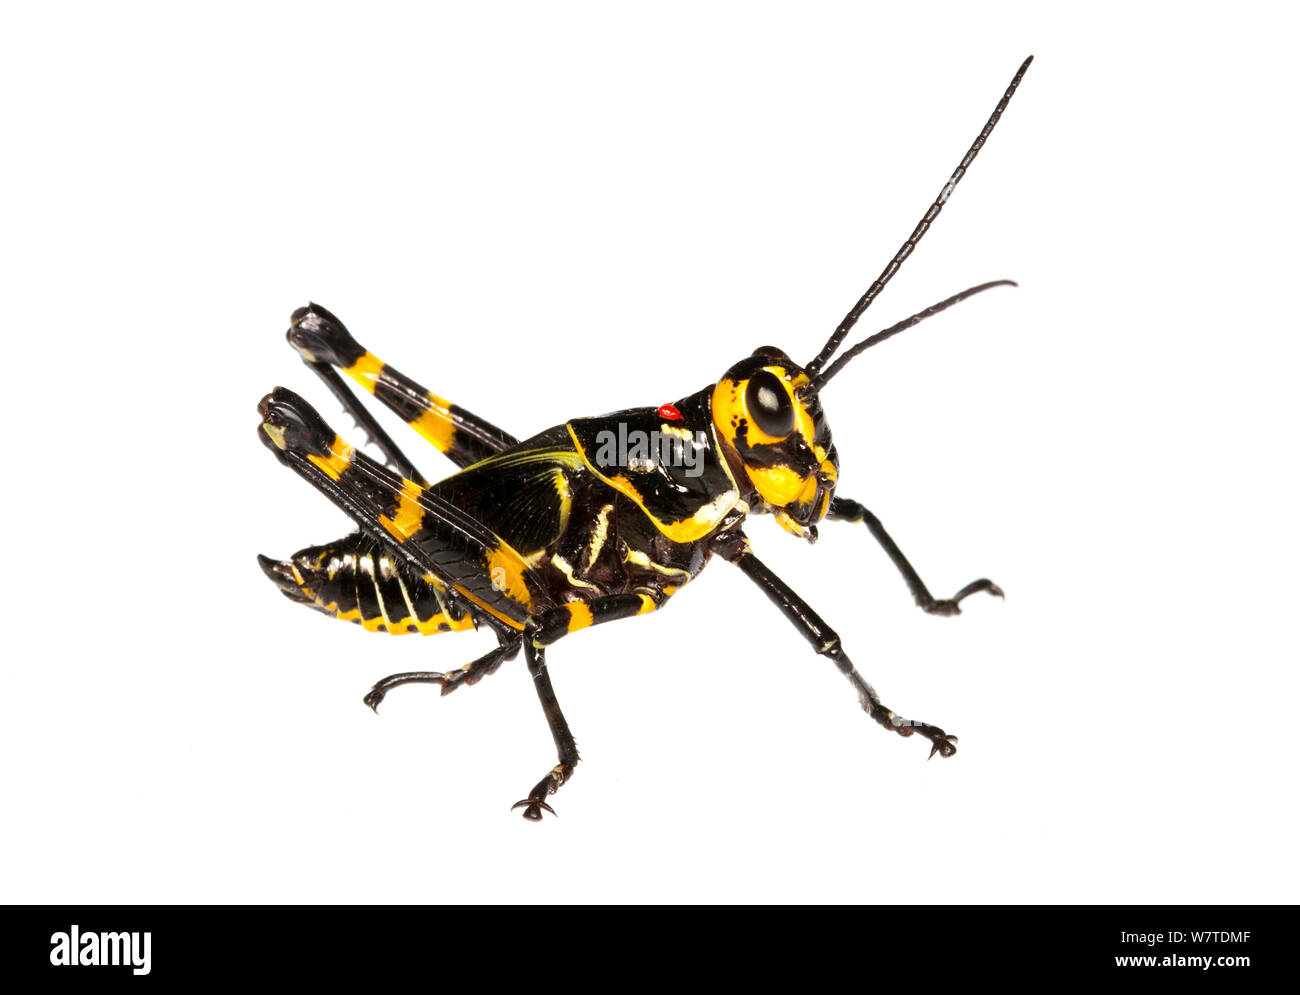 Soldato Grasshopper nymph (Chromacris speciosa) Gamboa, Panama. Progetto Meetyourneighbors.net Foto Stock